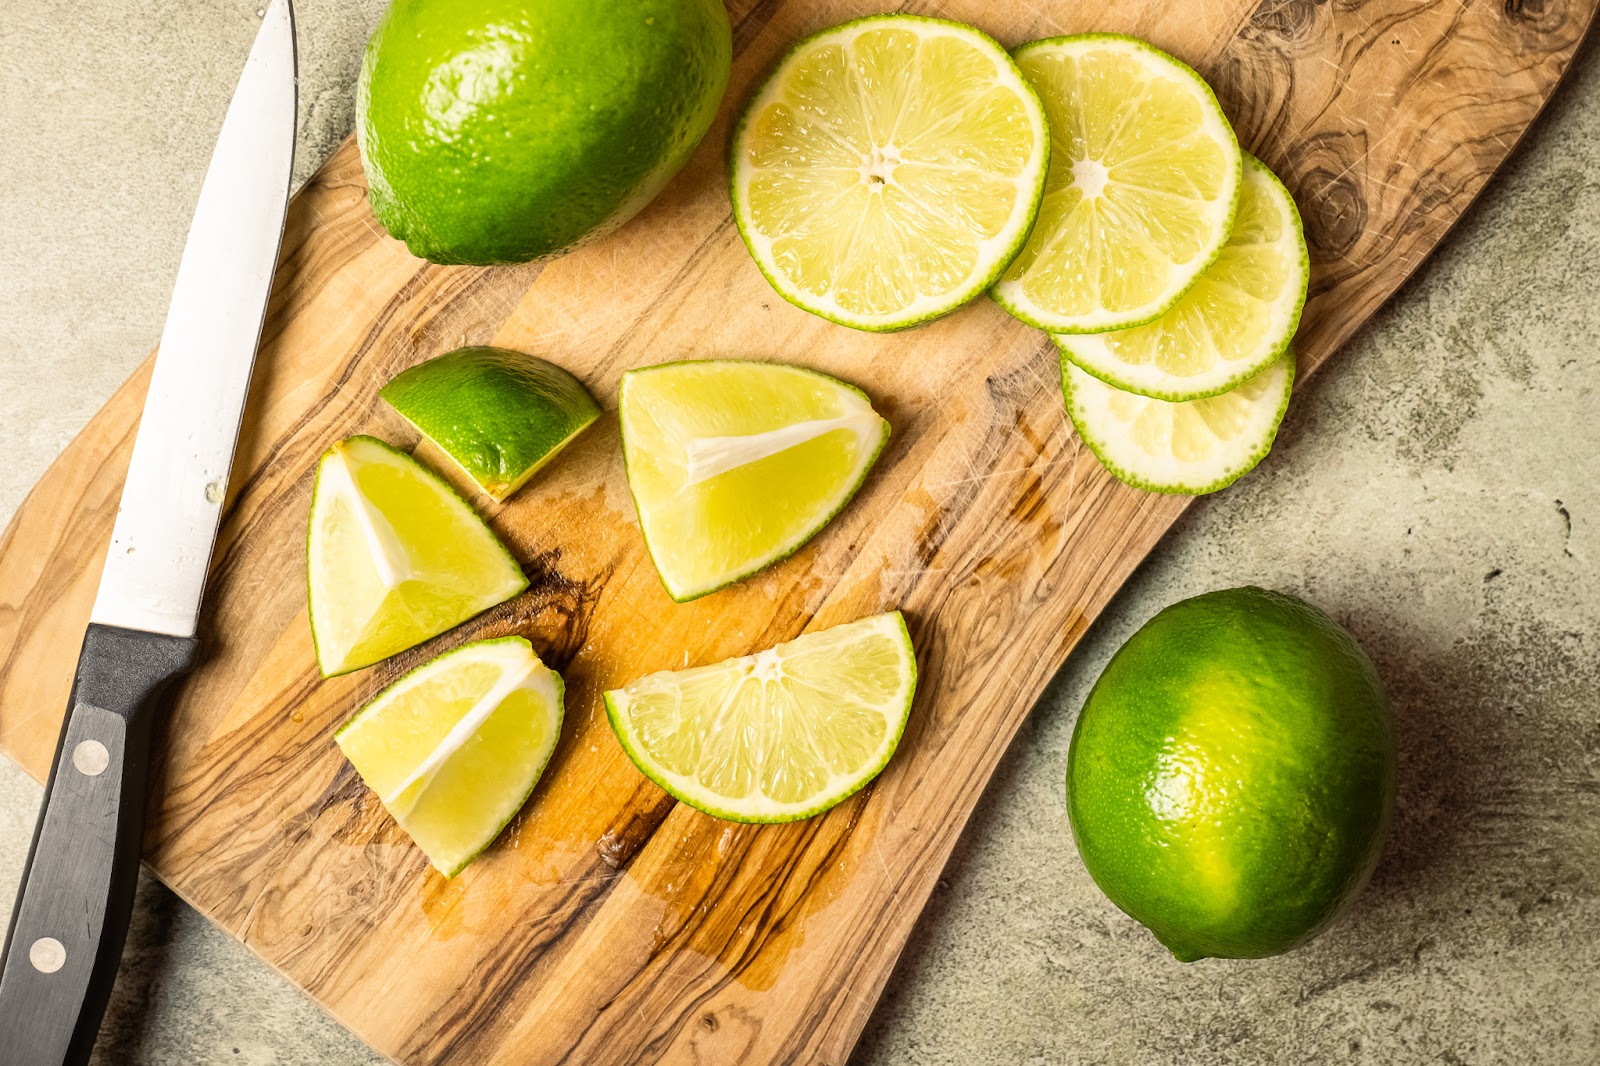 guide-to-citrus-fruits-bec010c7f10cc0ddd9c404a5